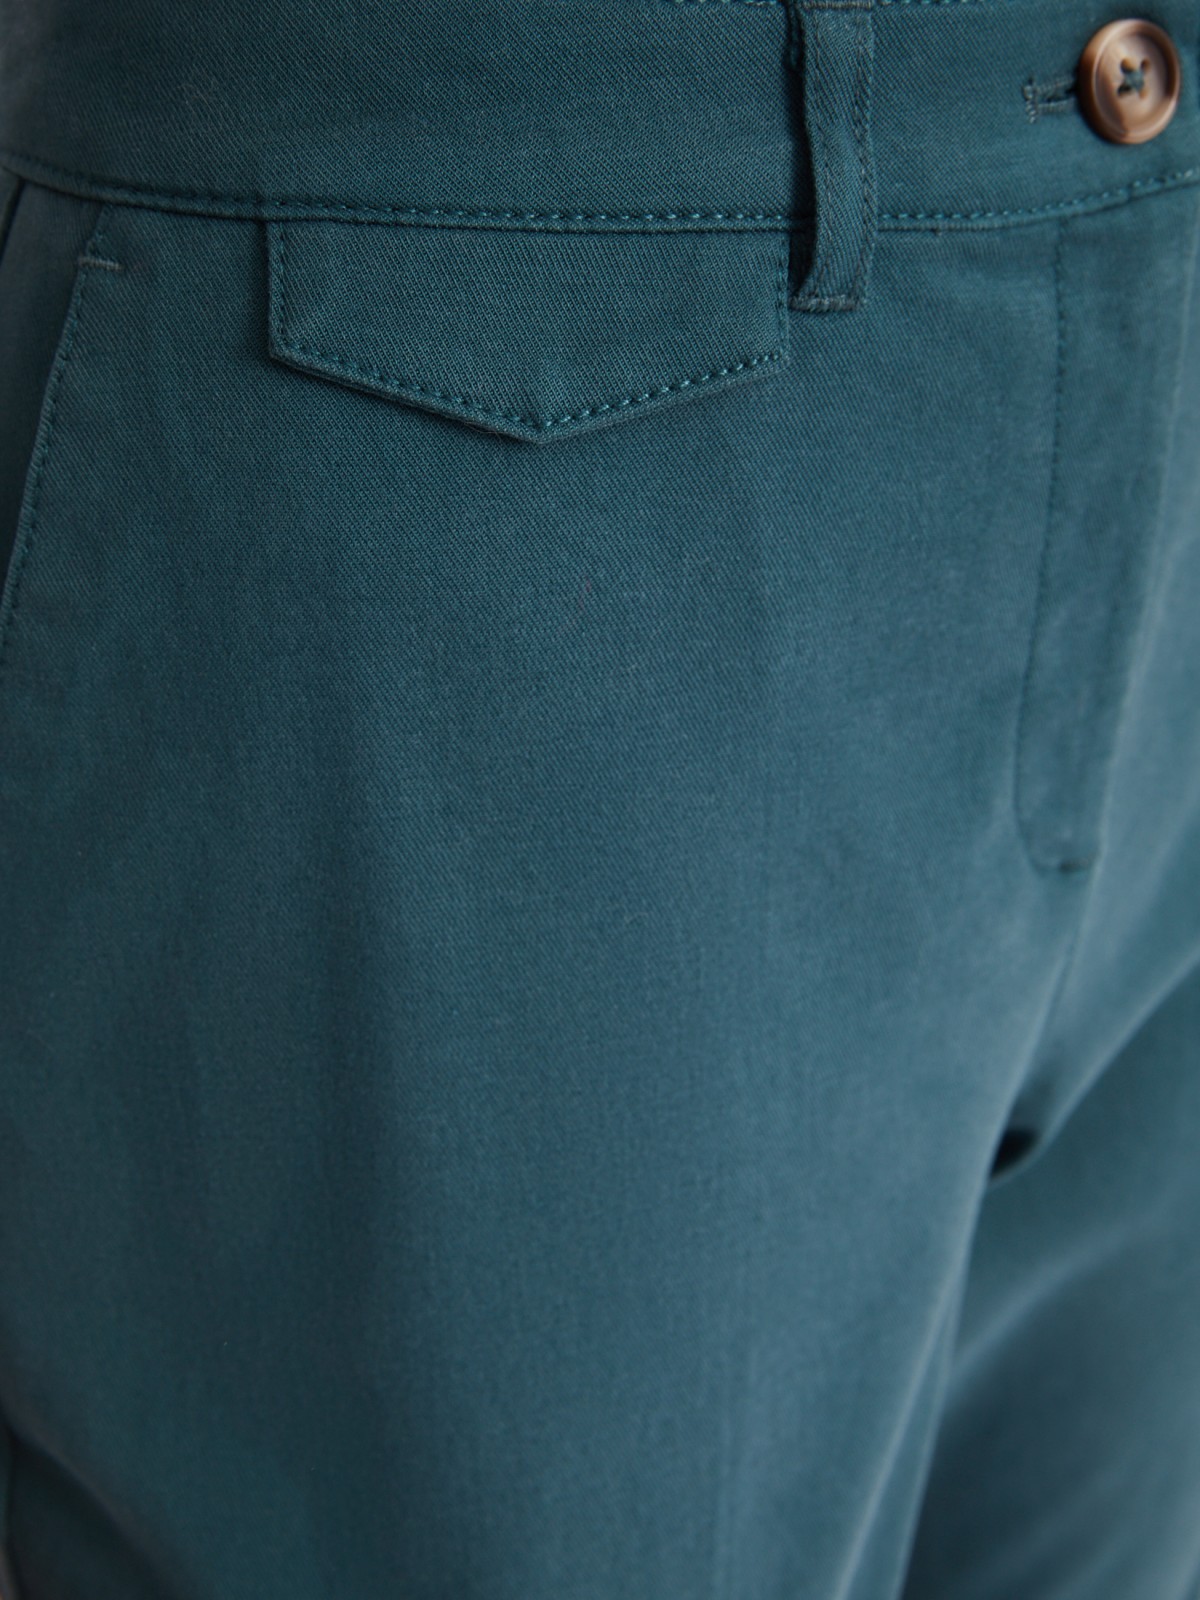 Брюки-чинос со средней посадкой zolla 02331736F043, цвет темно-бирюзовый, размер S - фото 5